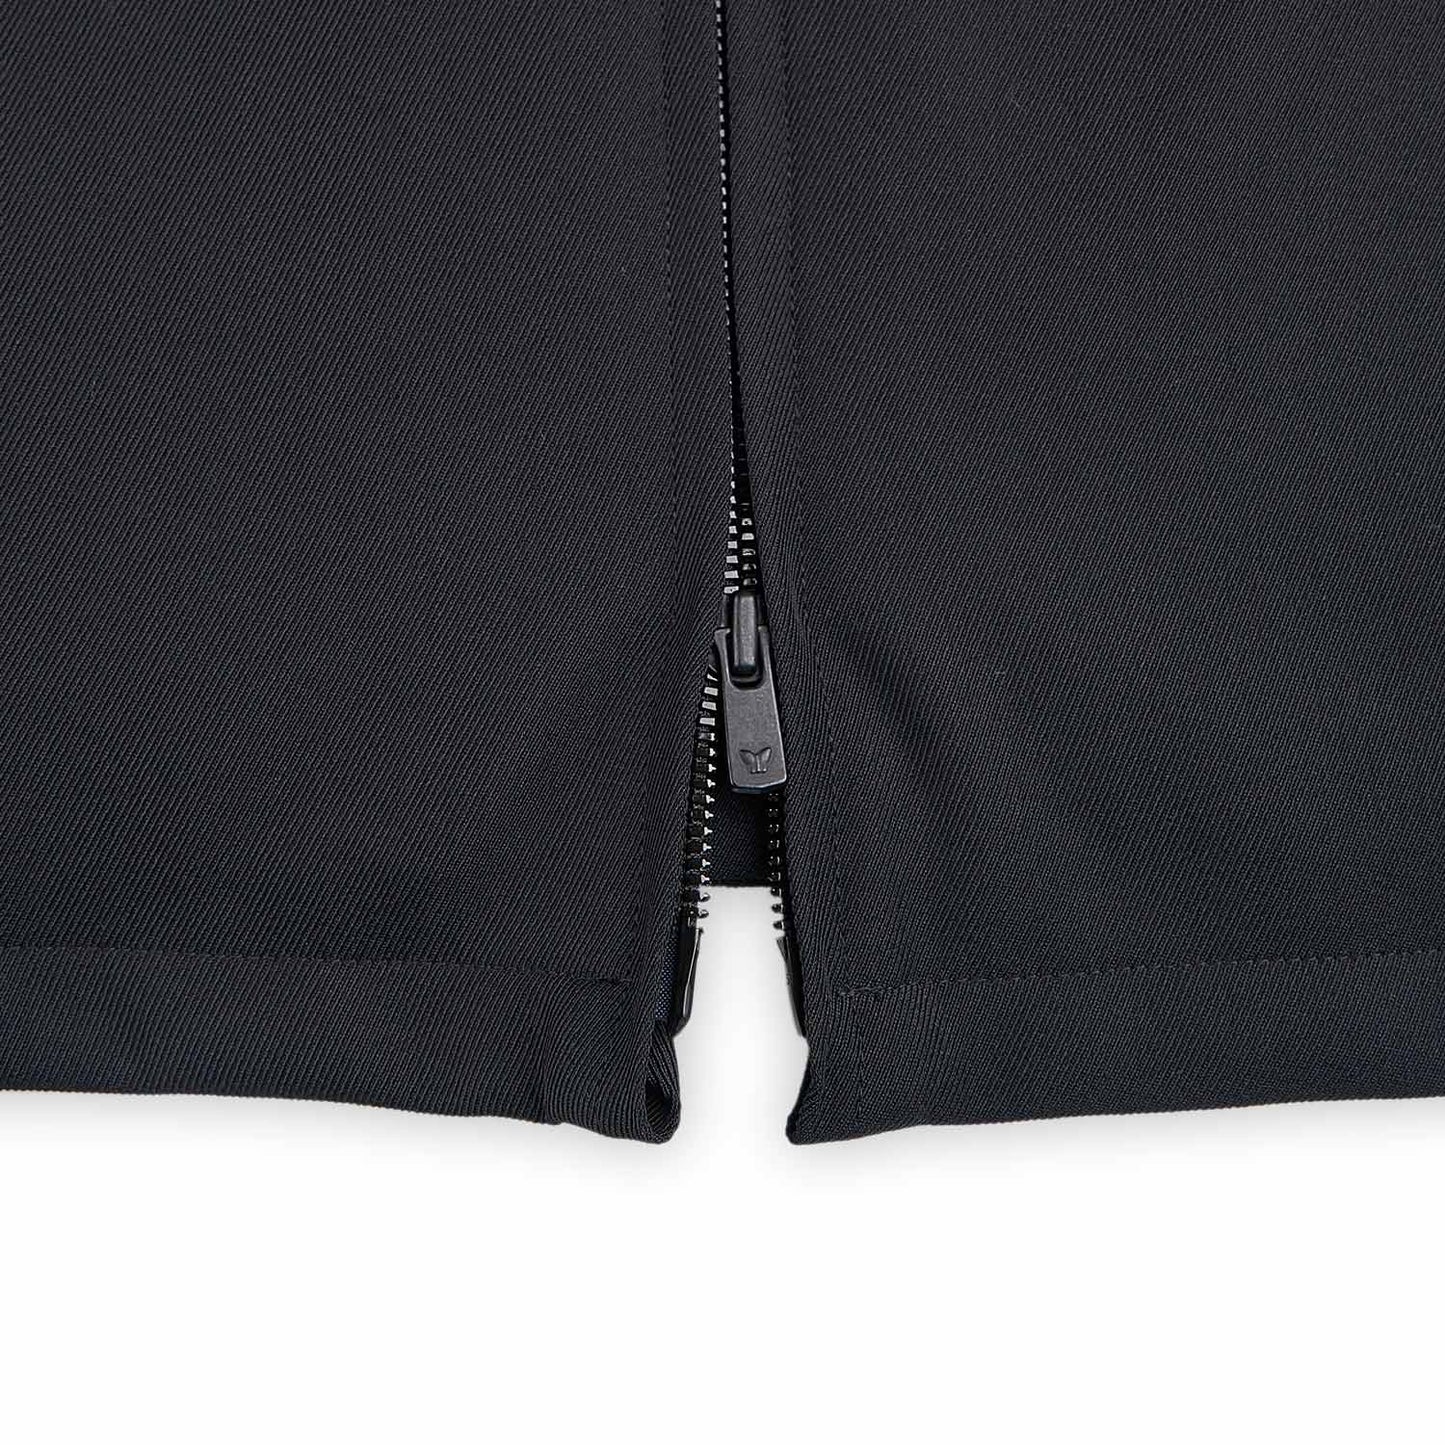 needles sport twill jacket (black)